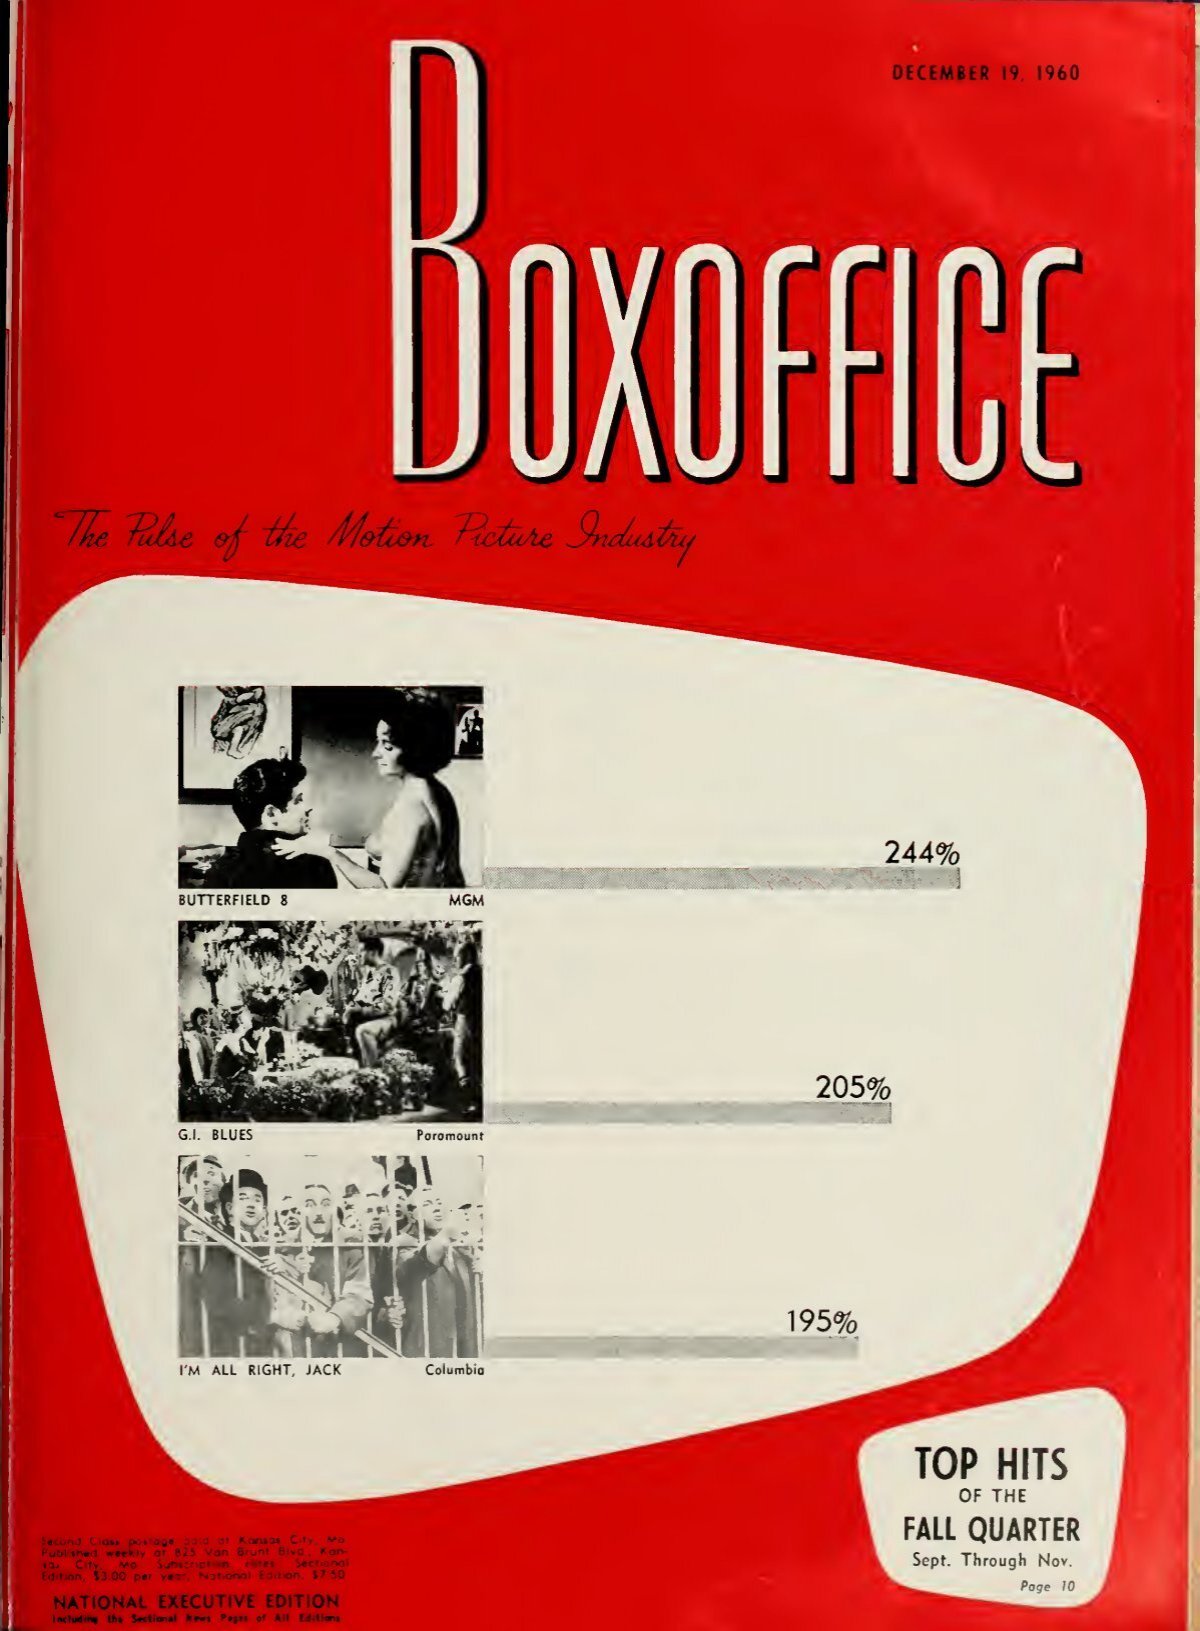 Boxoffice-December.19.1960